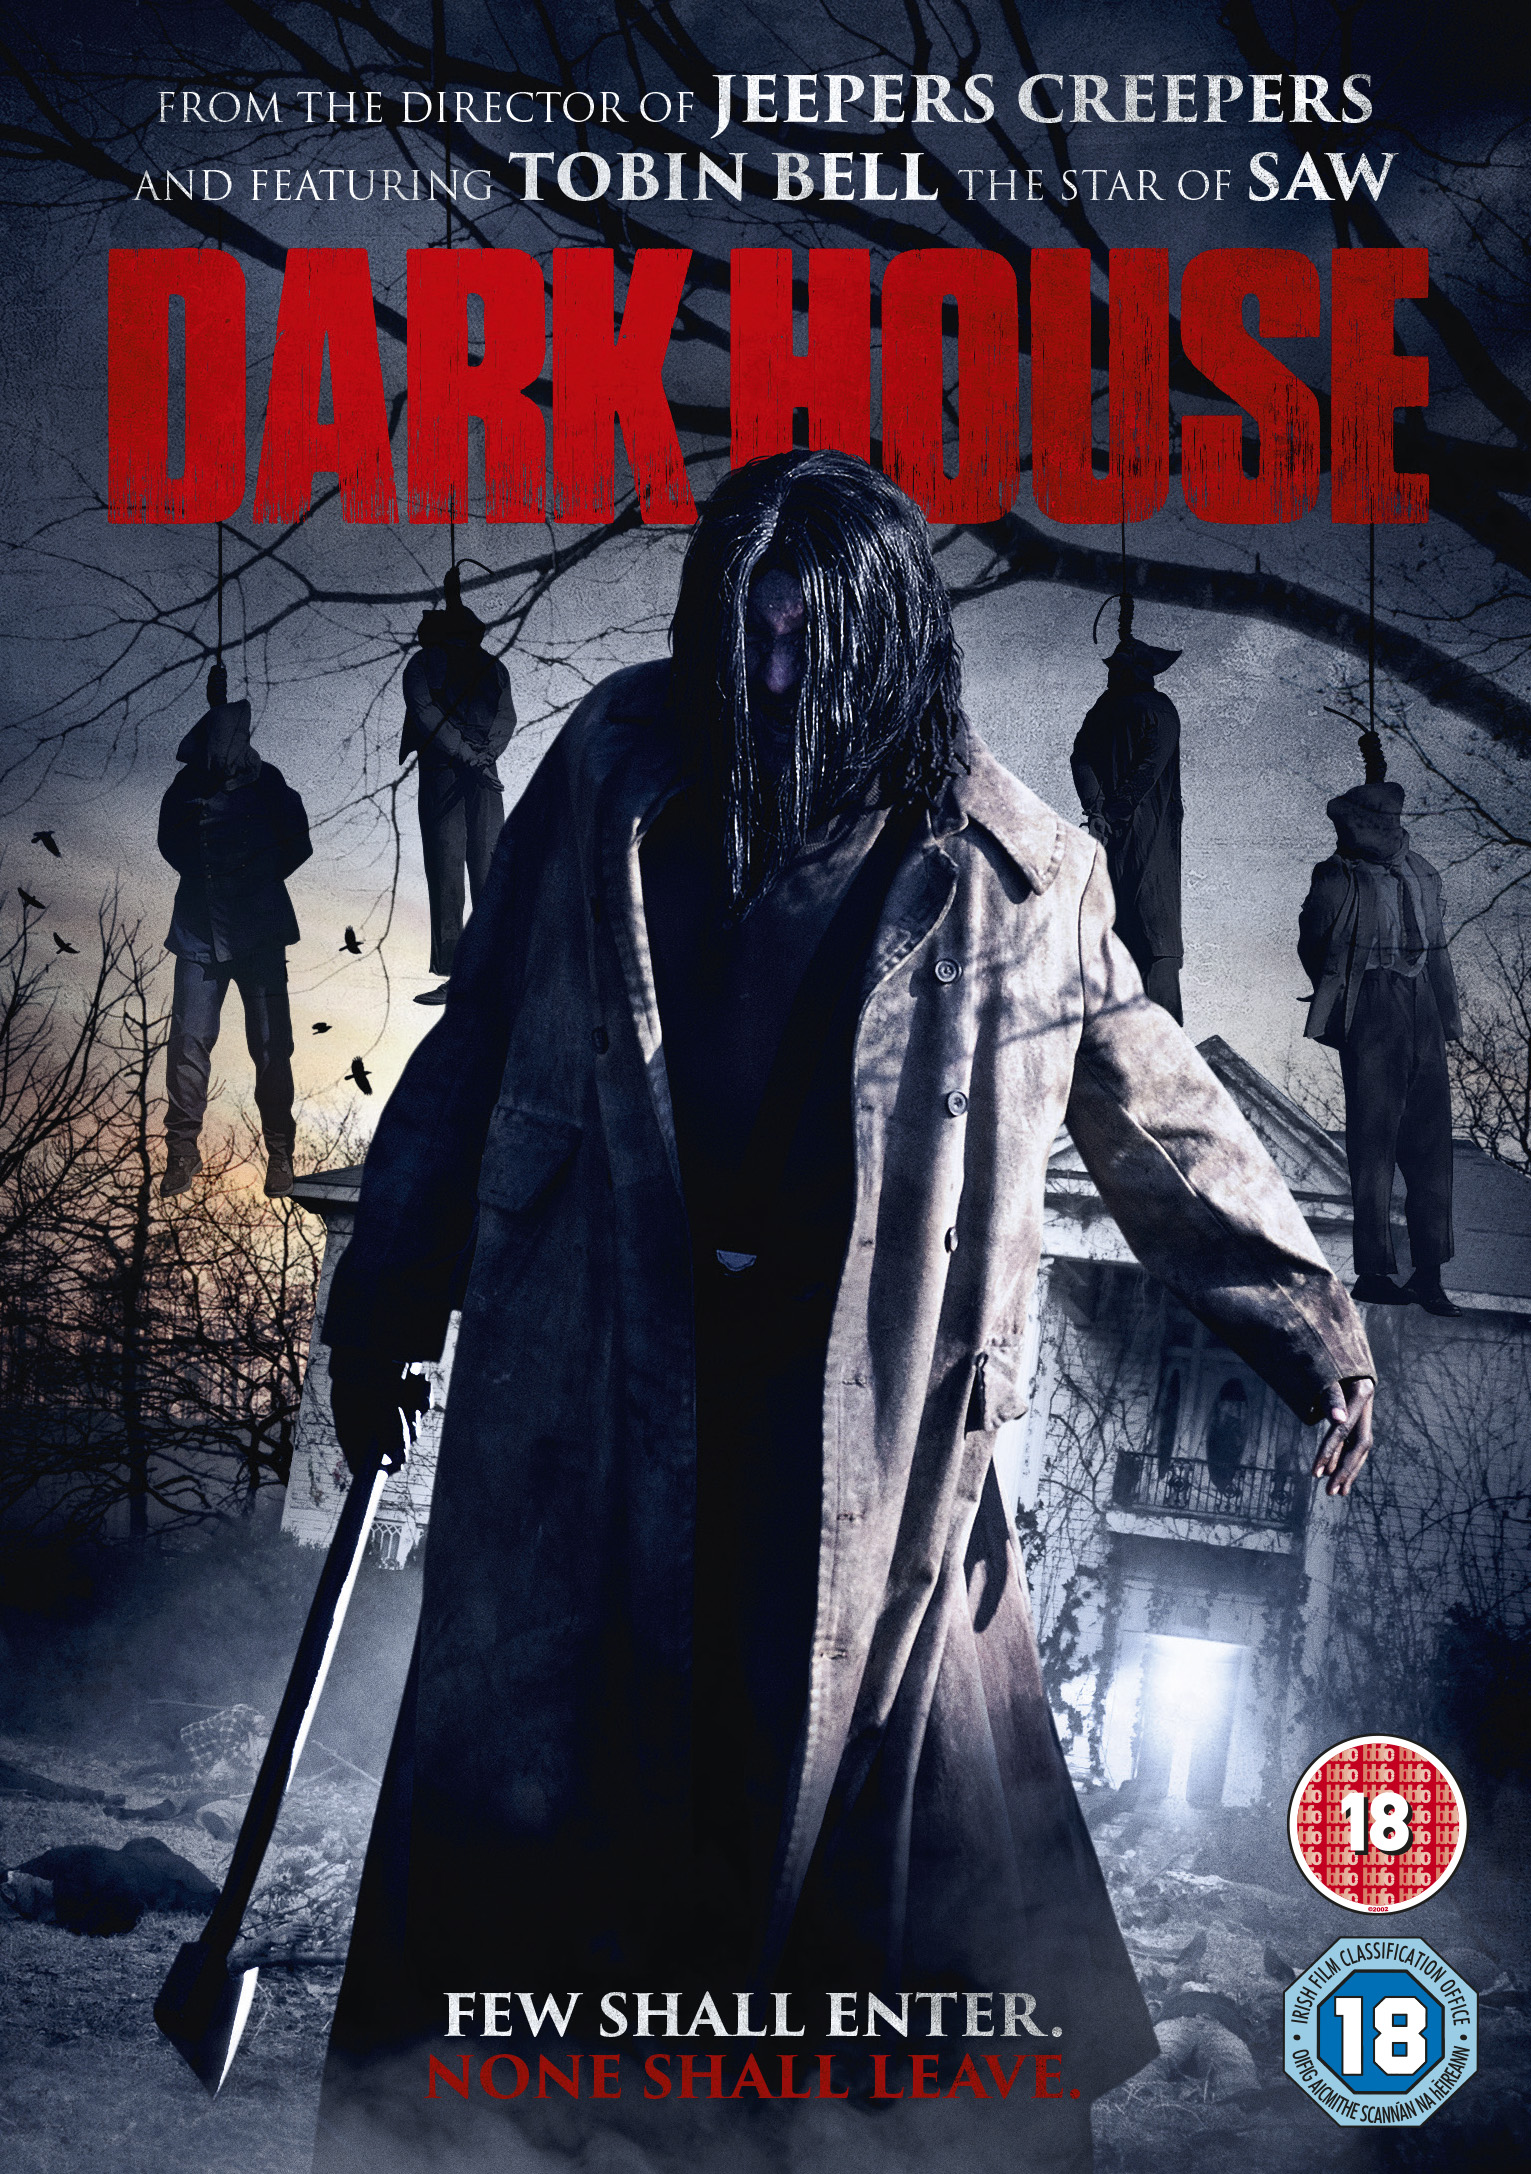 Dark House DVD review